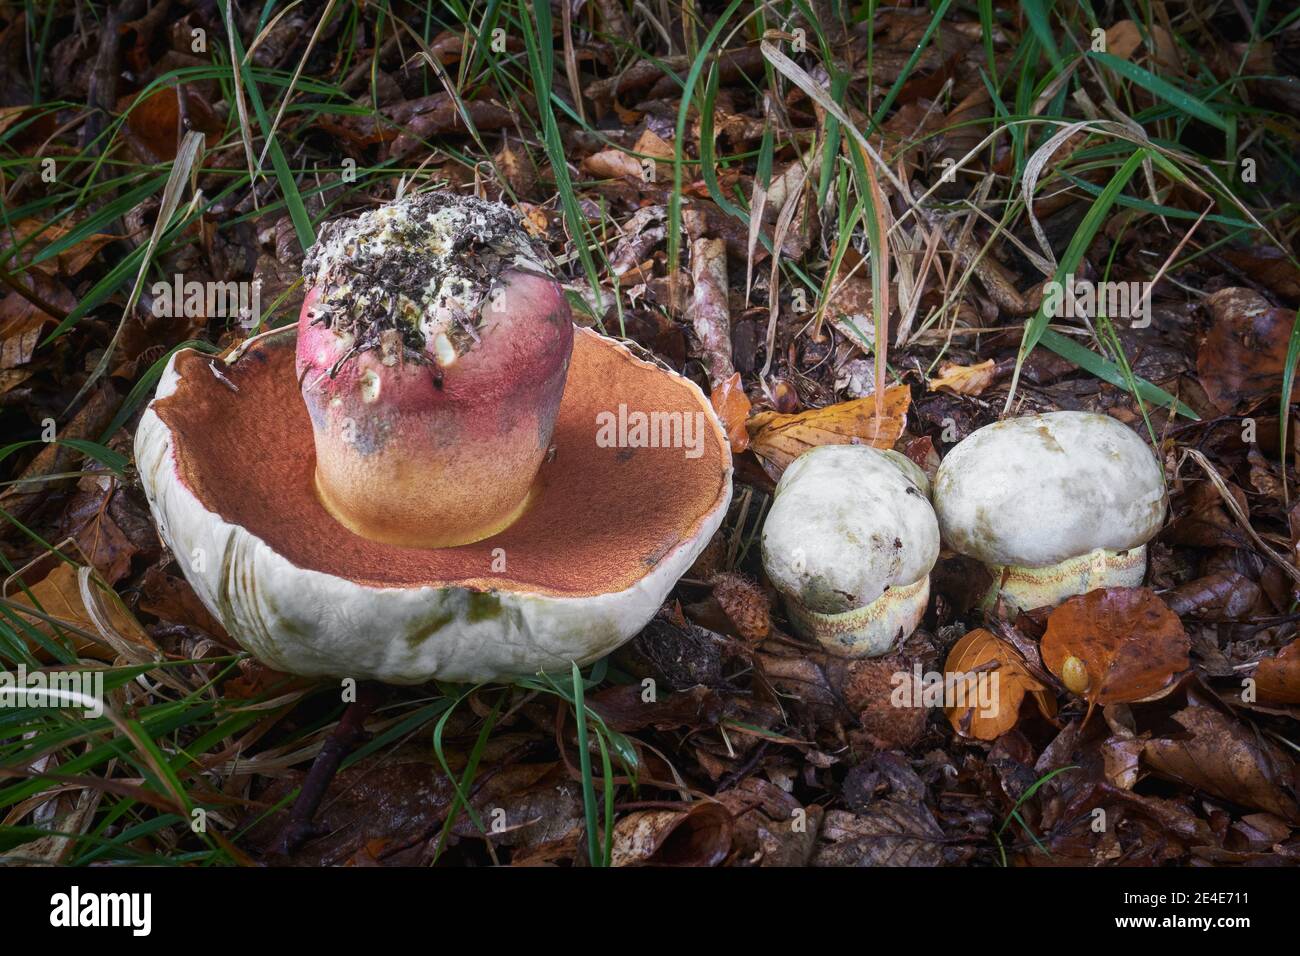 Rubroboletus satanas is a inedible mushrooms.  Poisonous mushrooms from central Europe. Stock Photo